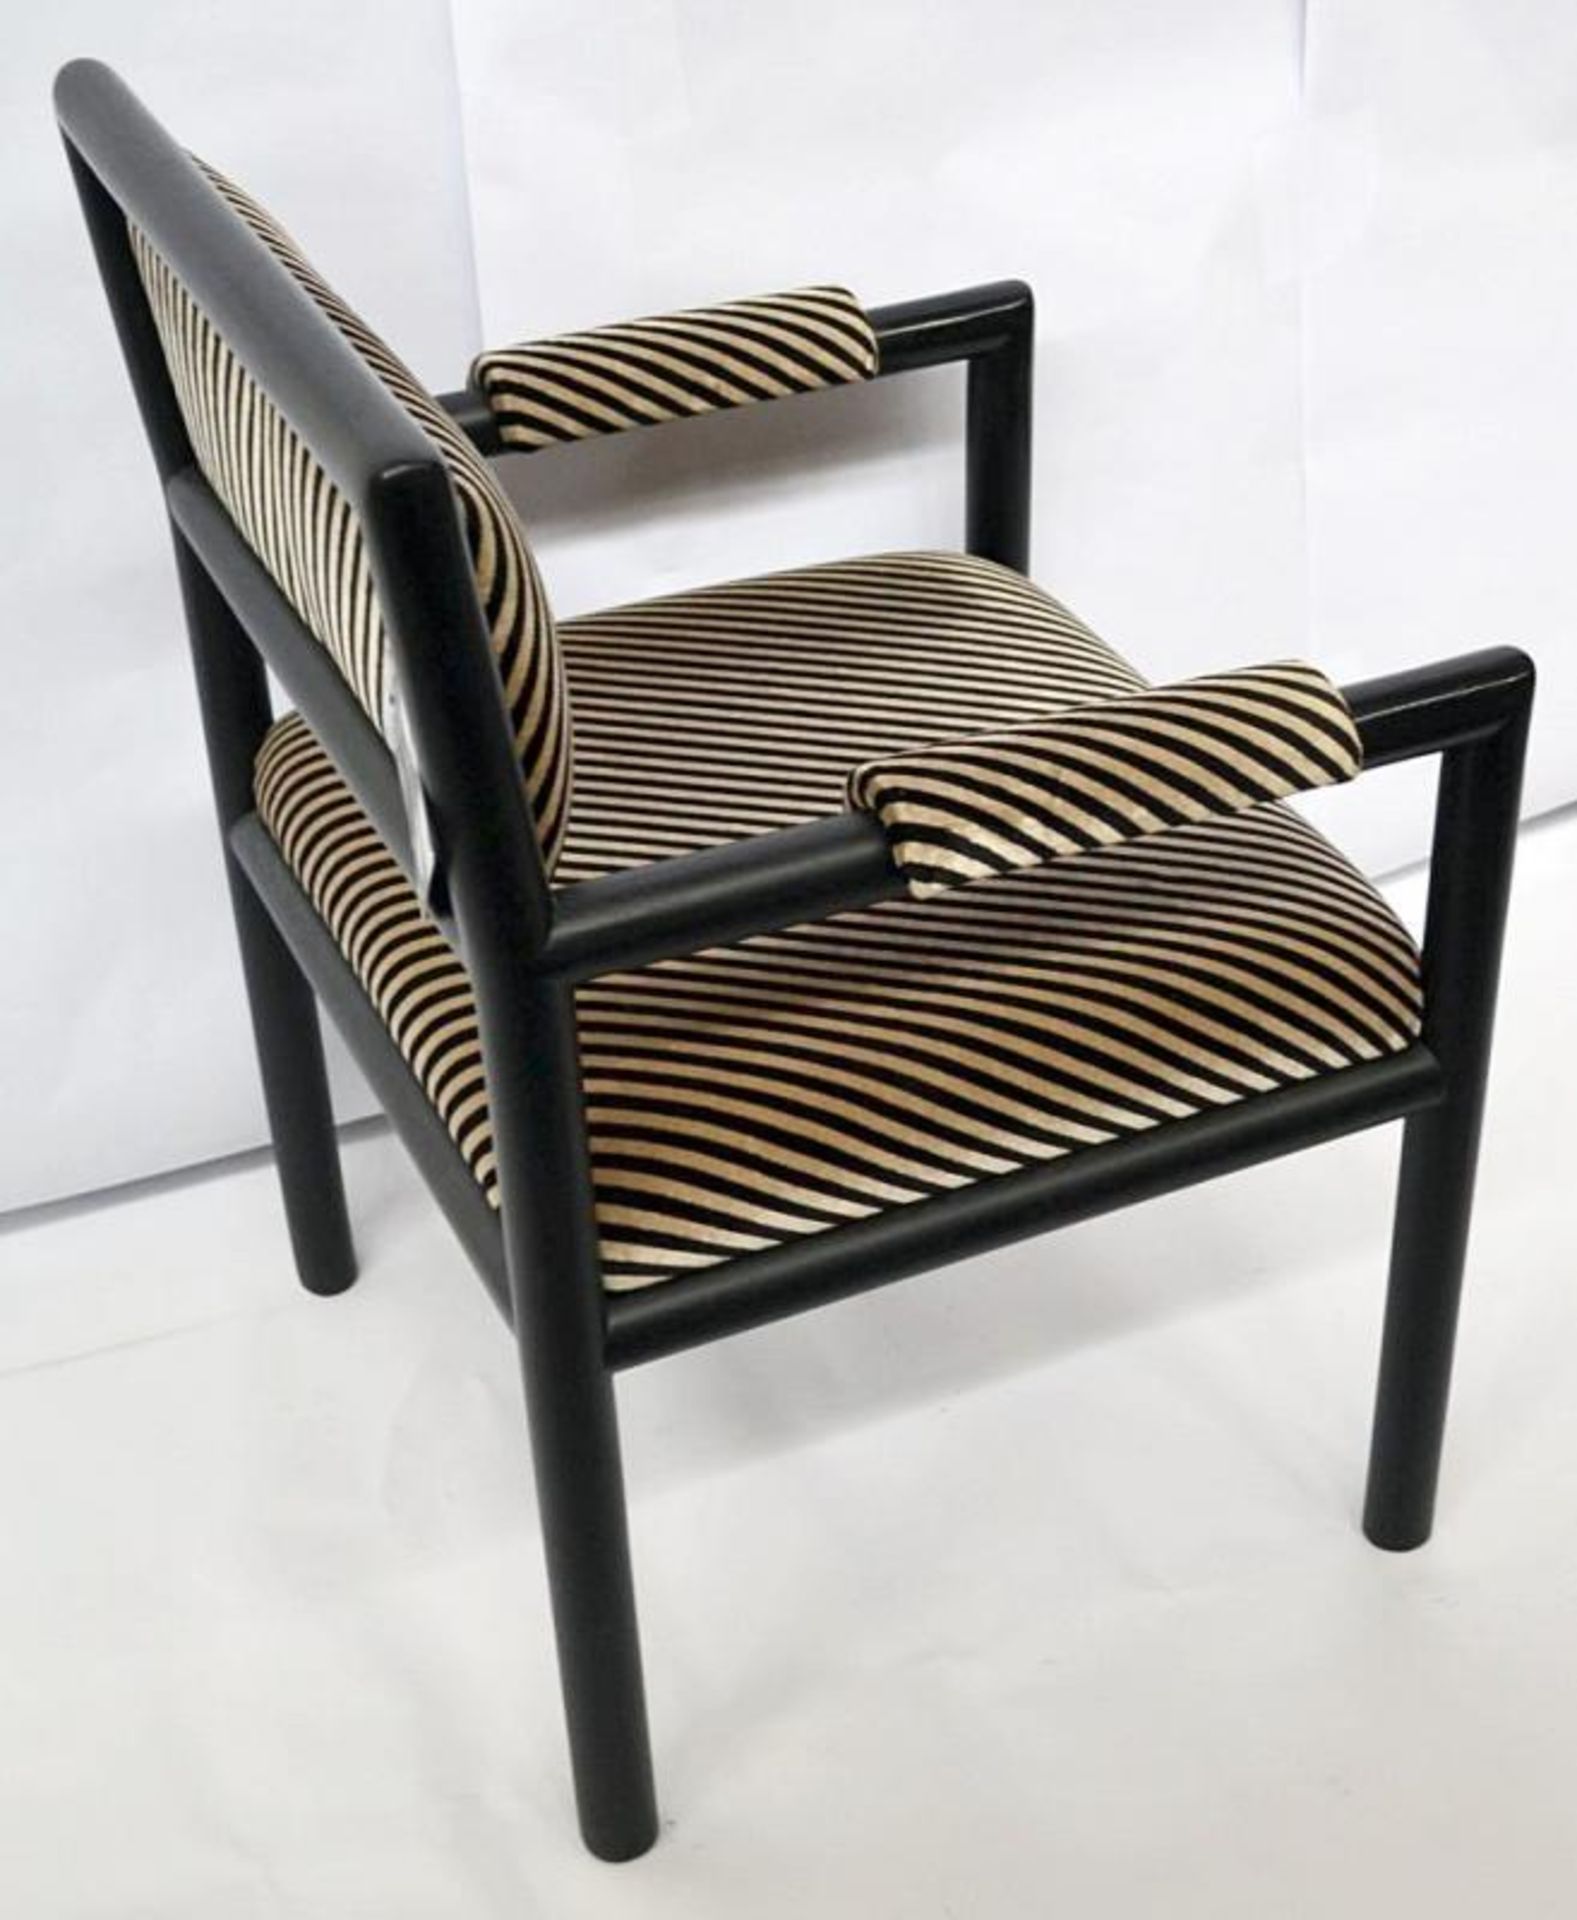 1 x KELLY WEARSTLER Croft Occasional Chair - Ref: 5163501 - CL087 - Location: Altrincham WA14 - Orig - Image 19 of 24